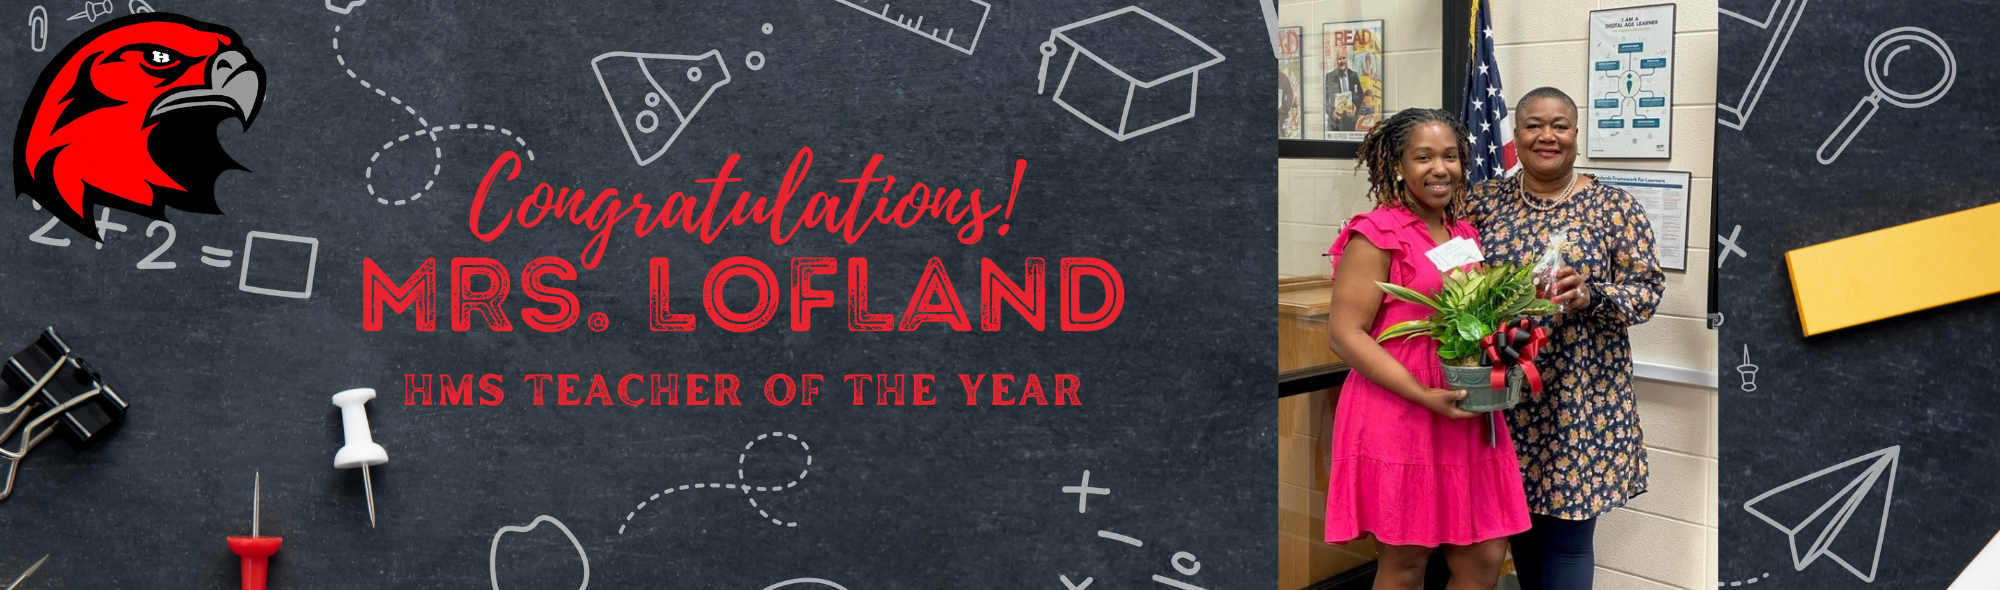 Congratulations Mrs. Lofland, HMS Teacher of the Year